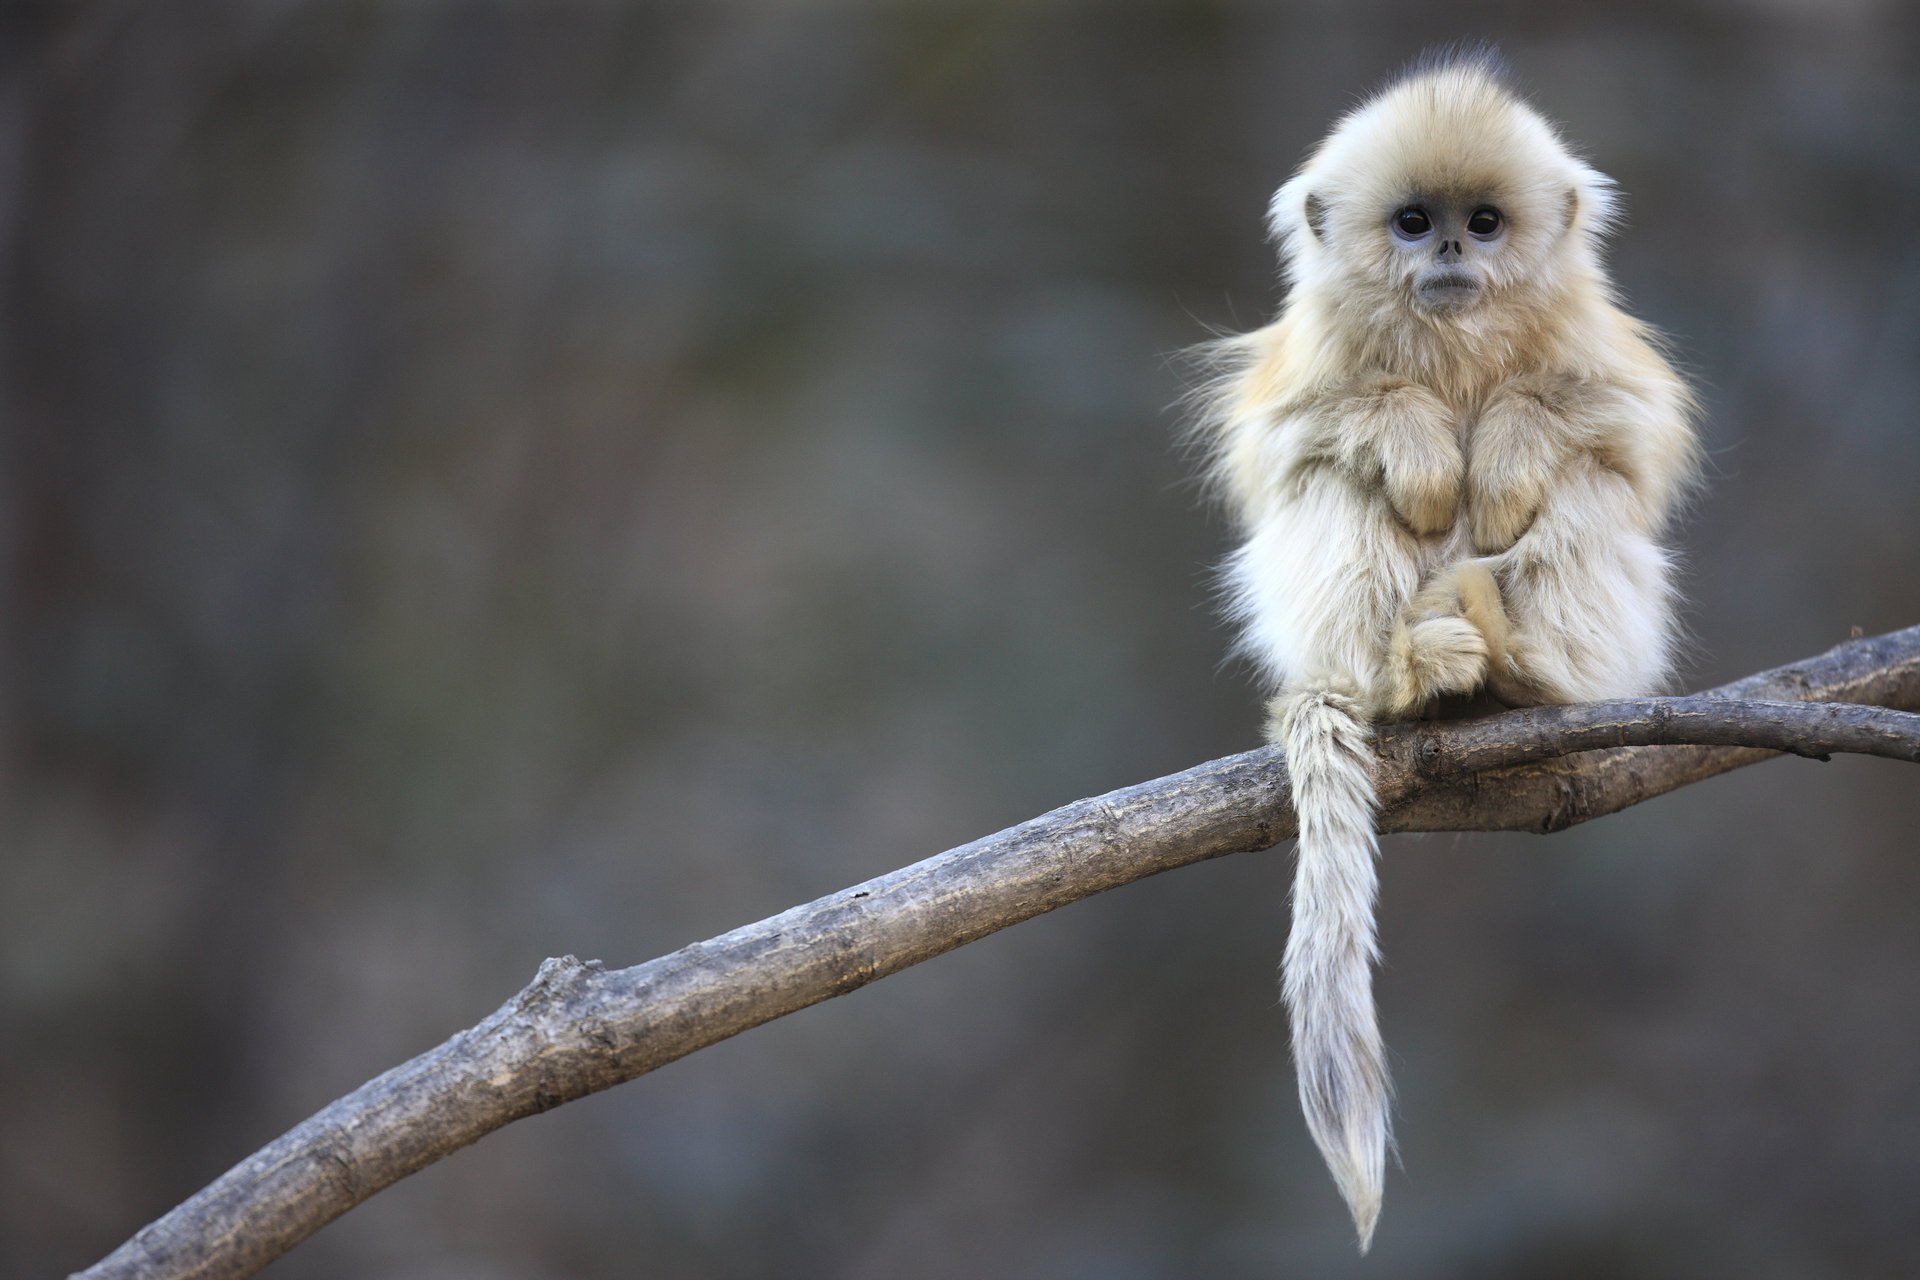 A little monkey sitting on a branch